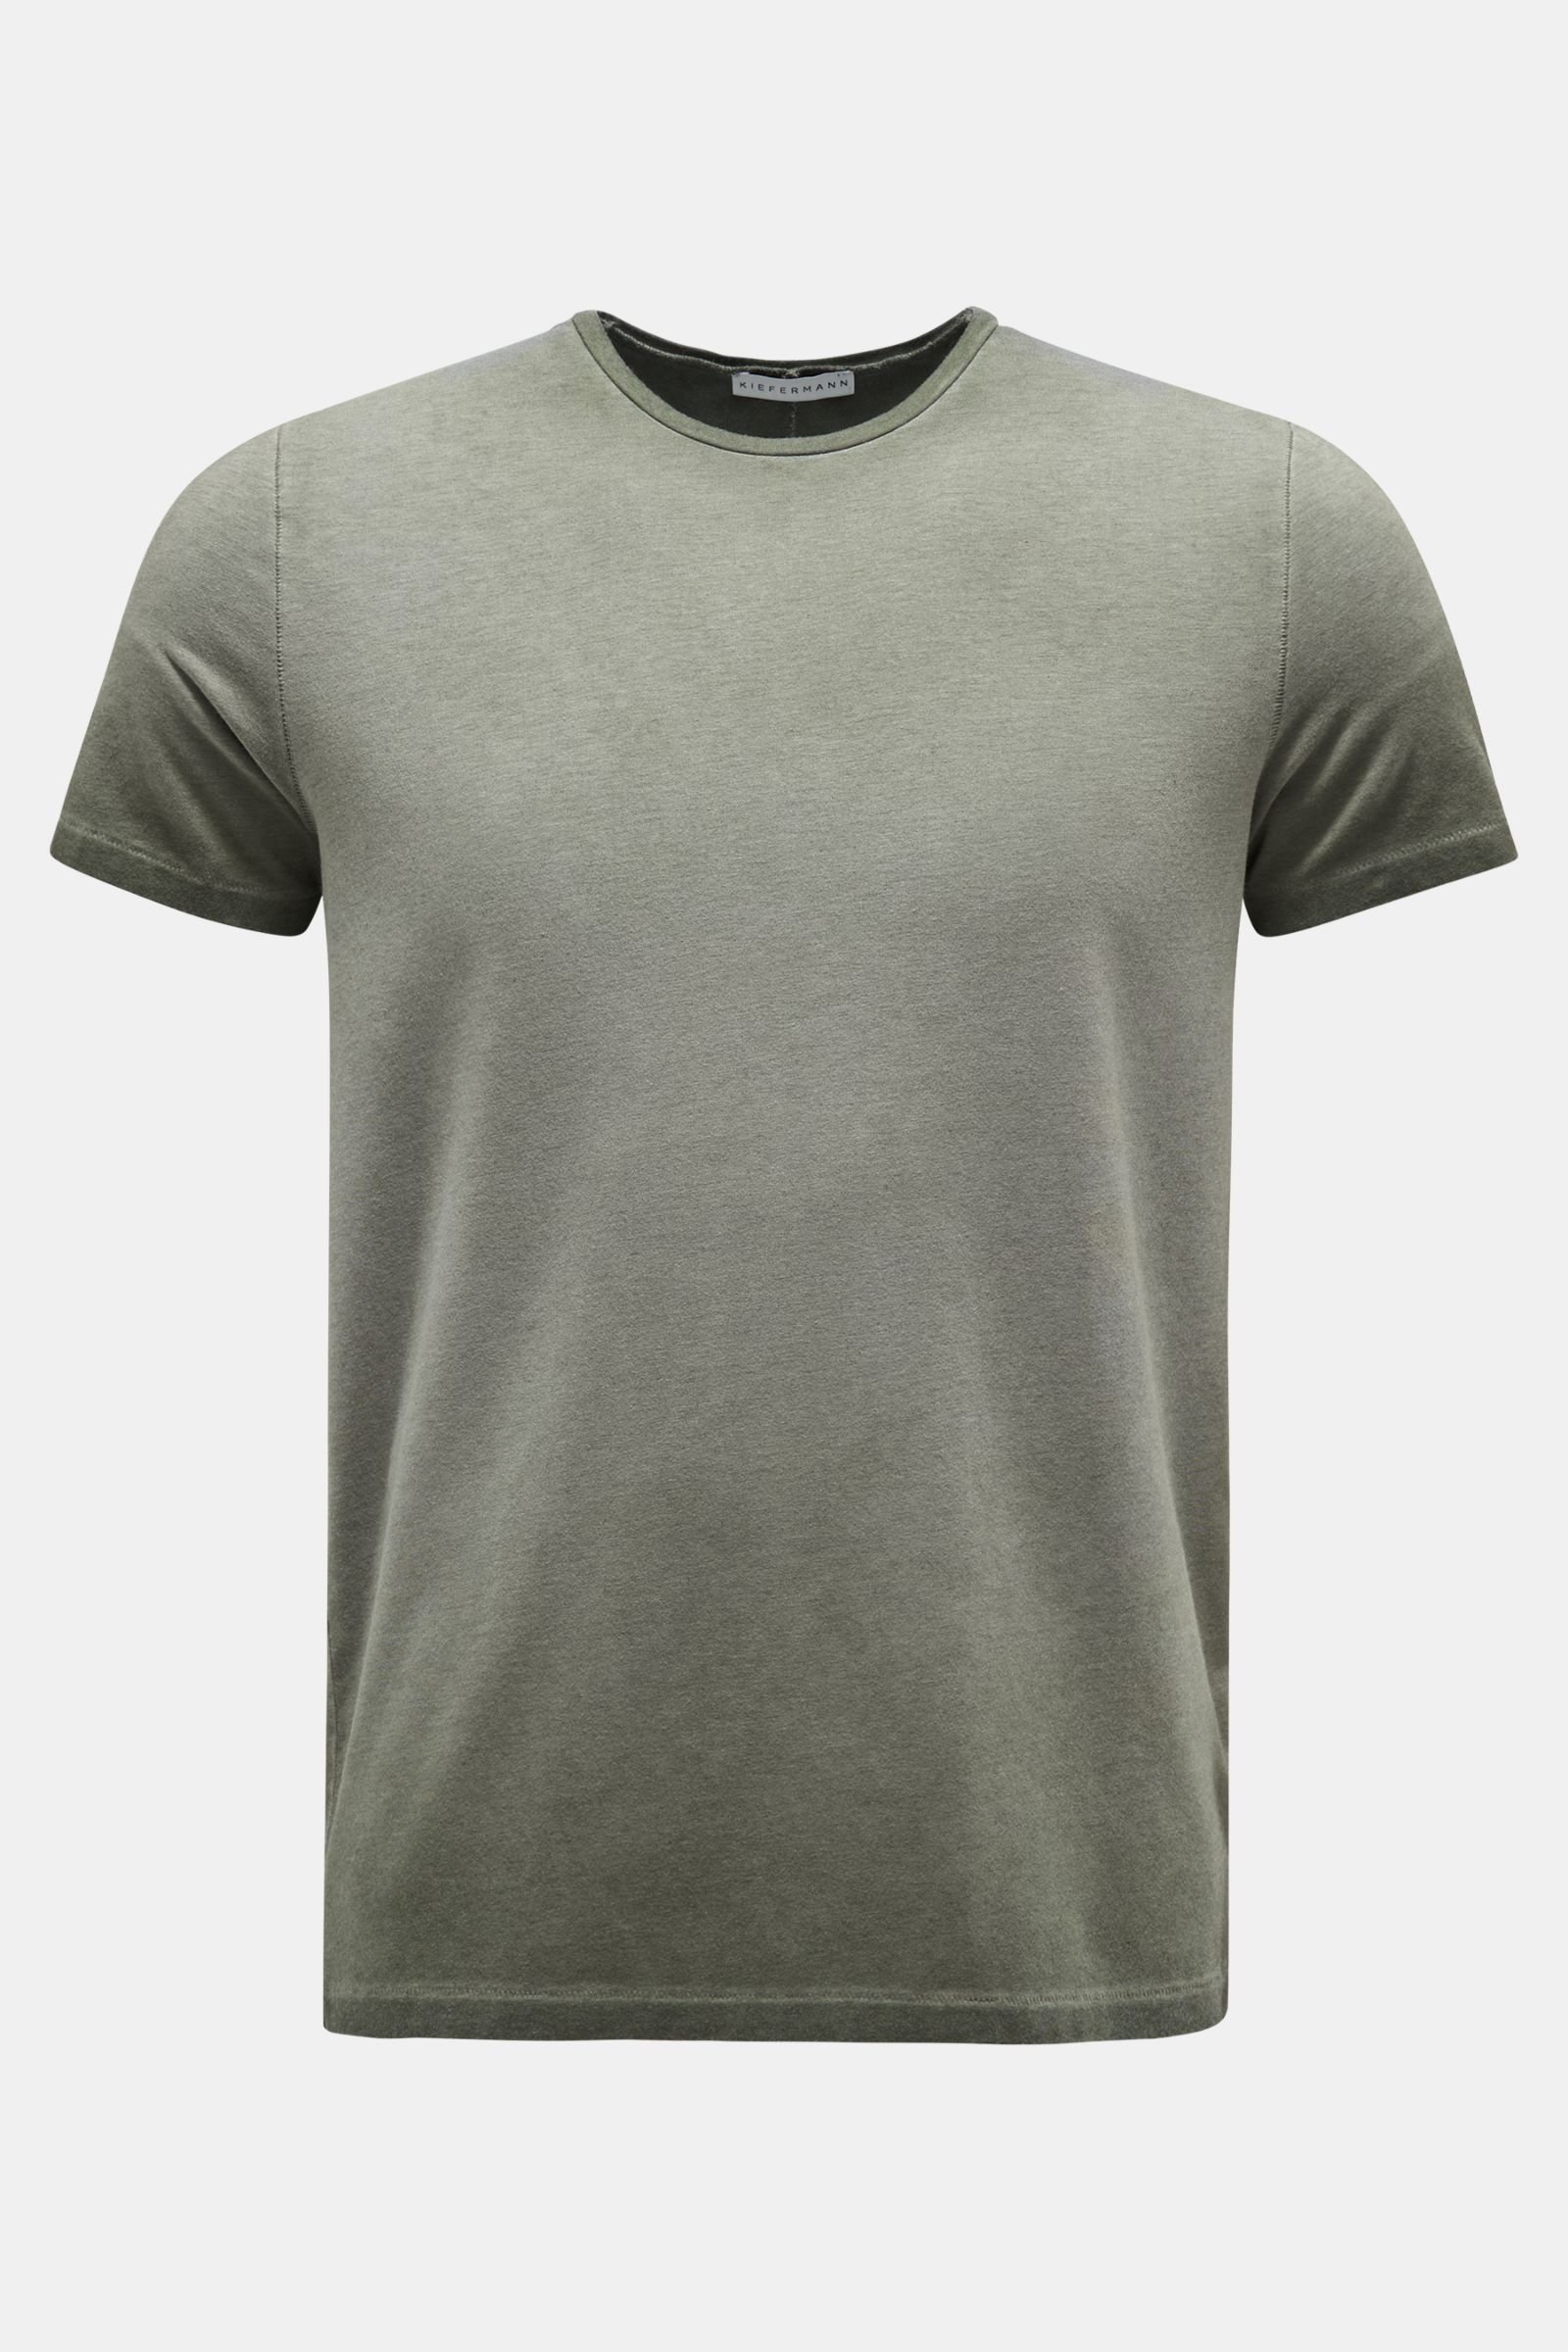 Rundhals-T-Shirt 'Robin' graugrün